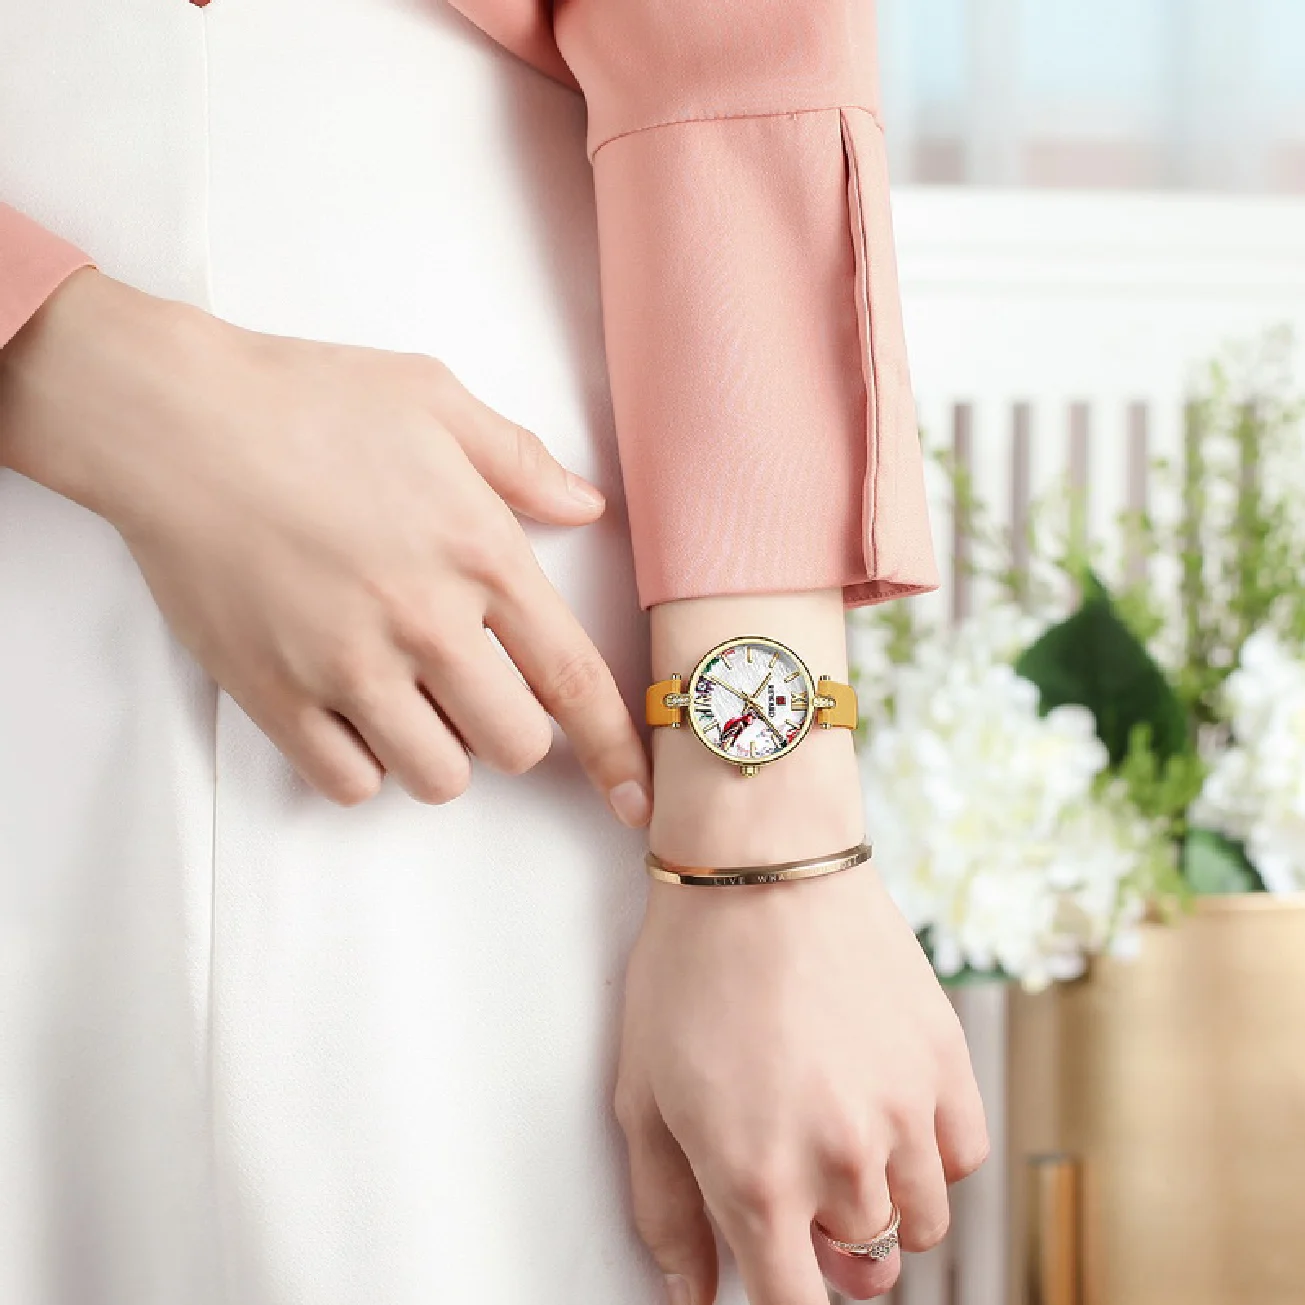 REWARD Luxury Women Watches Rhinestone Quartz Watch Waterproof Ladies Mesh Stainless Steel Wristwatch Top Brand Relogio Feminino enlarge